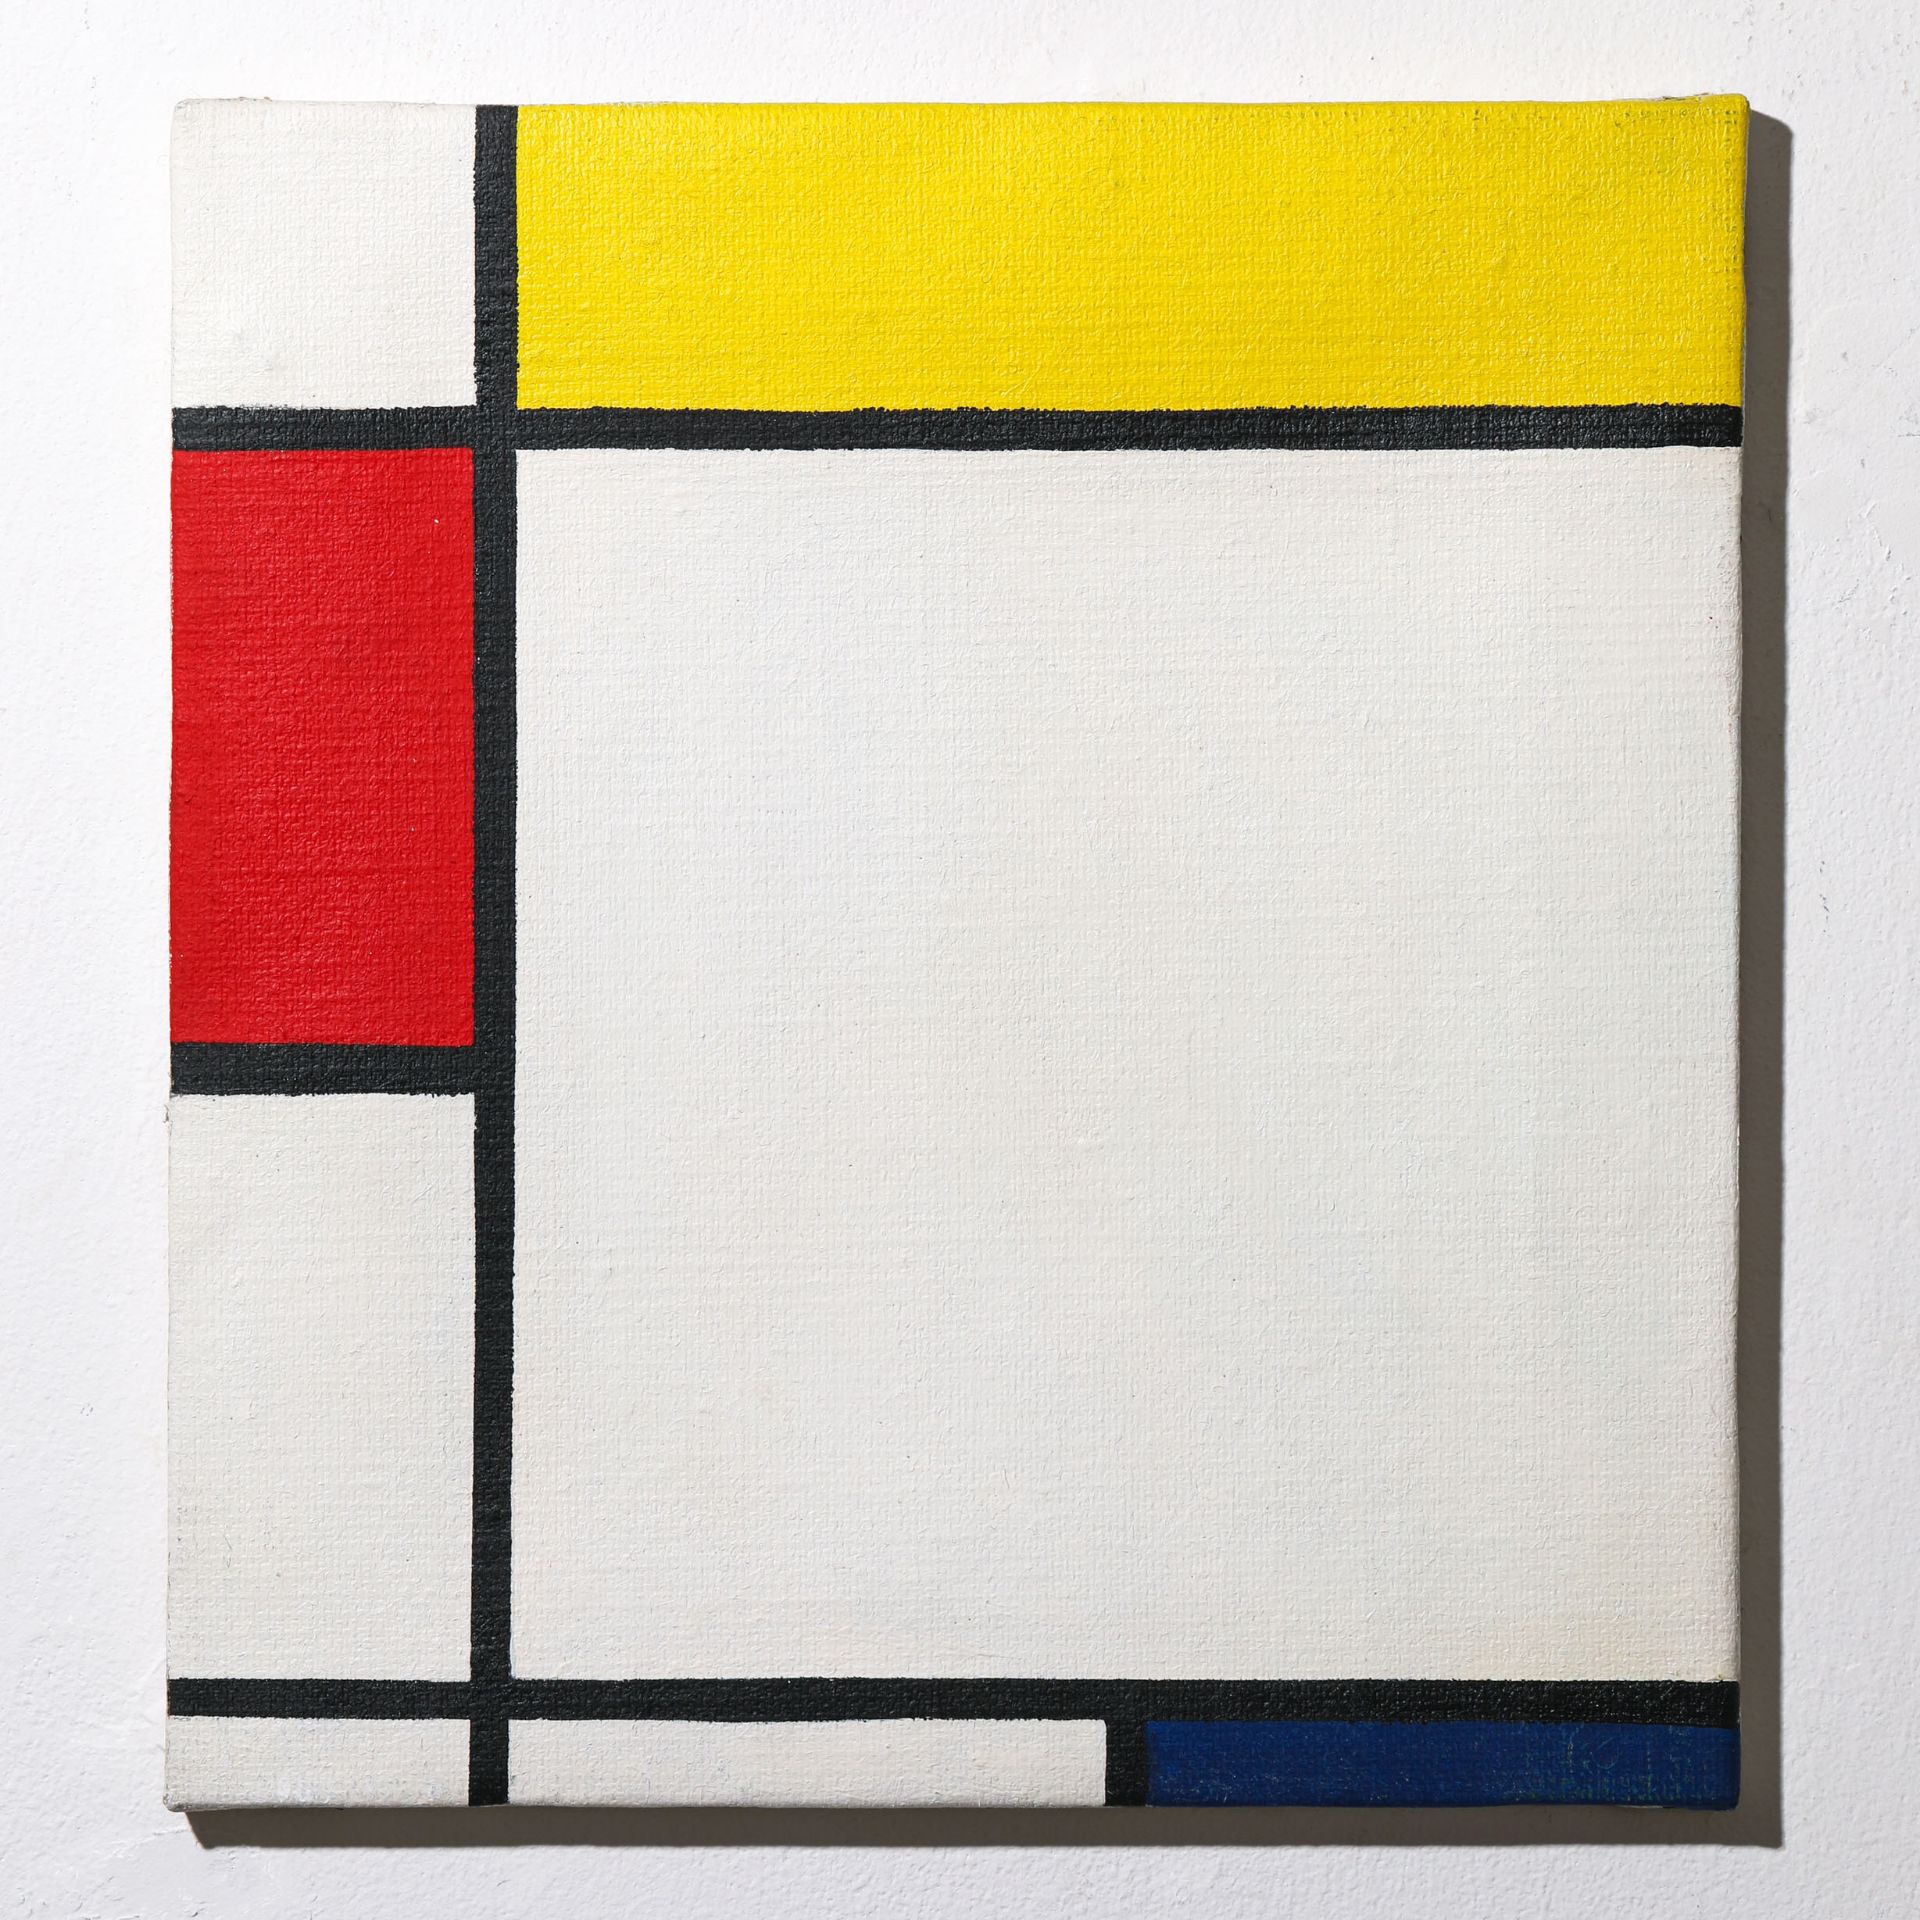 Andrea Branzi*, Studio Alchymia / Alchimia, Mondrian aus der bau. haus art collection Edition 2/10